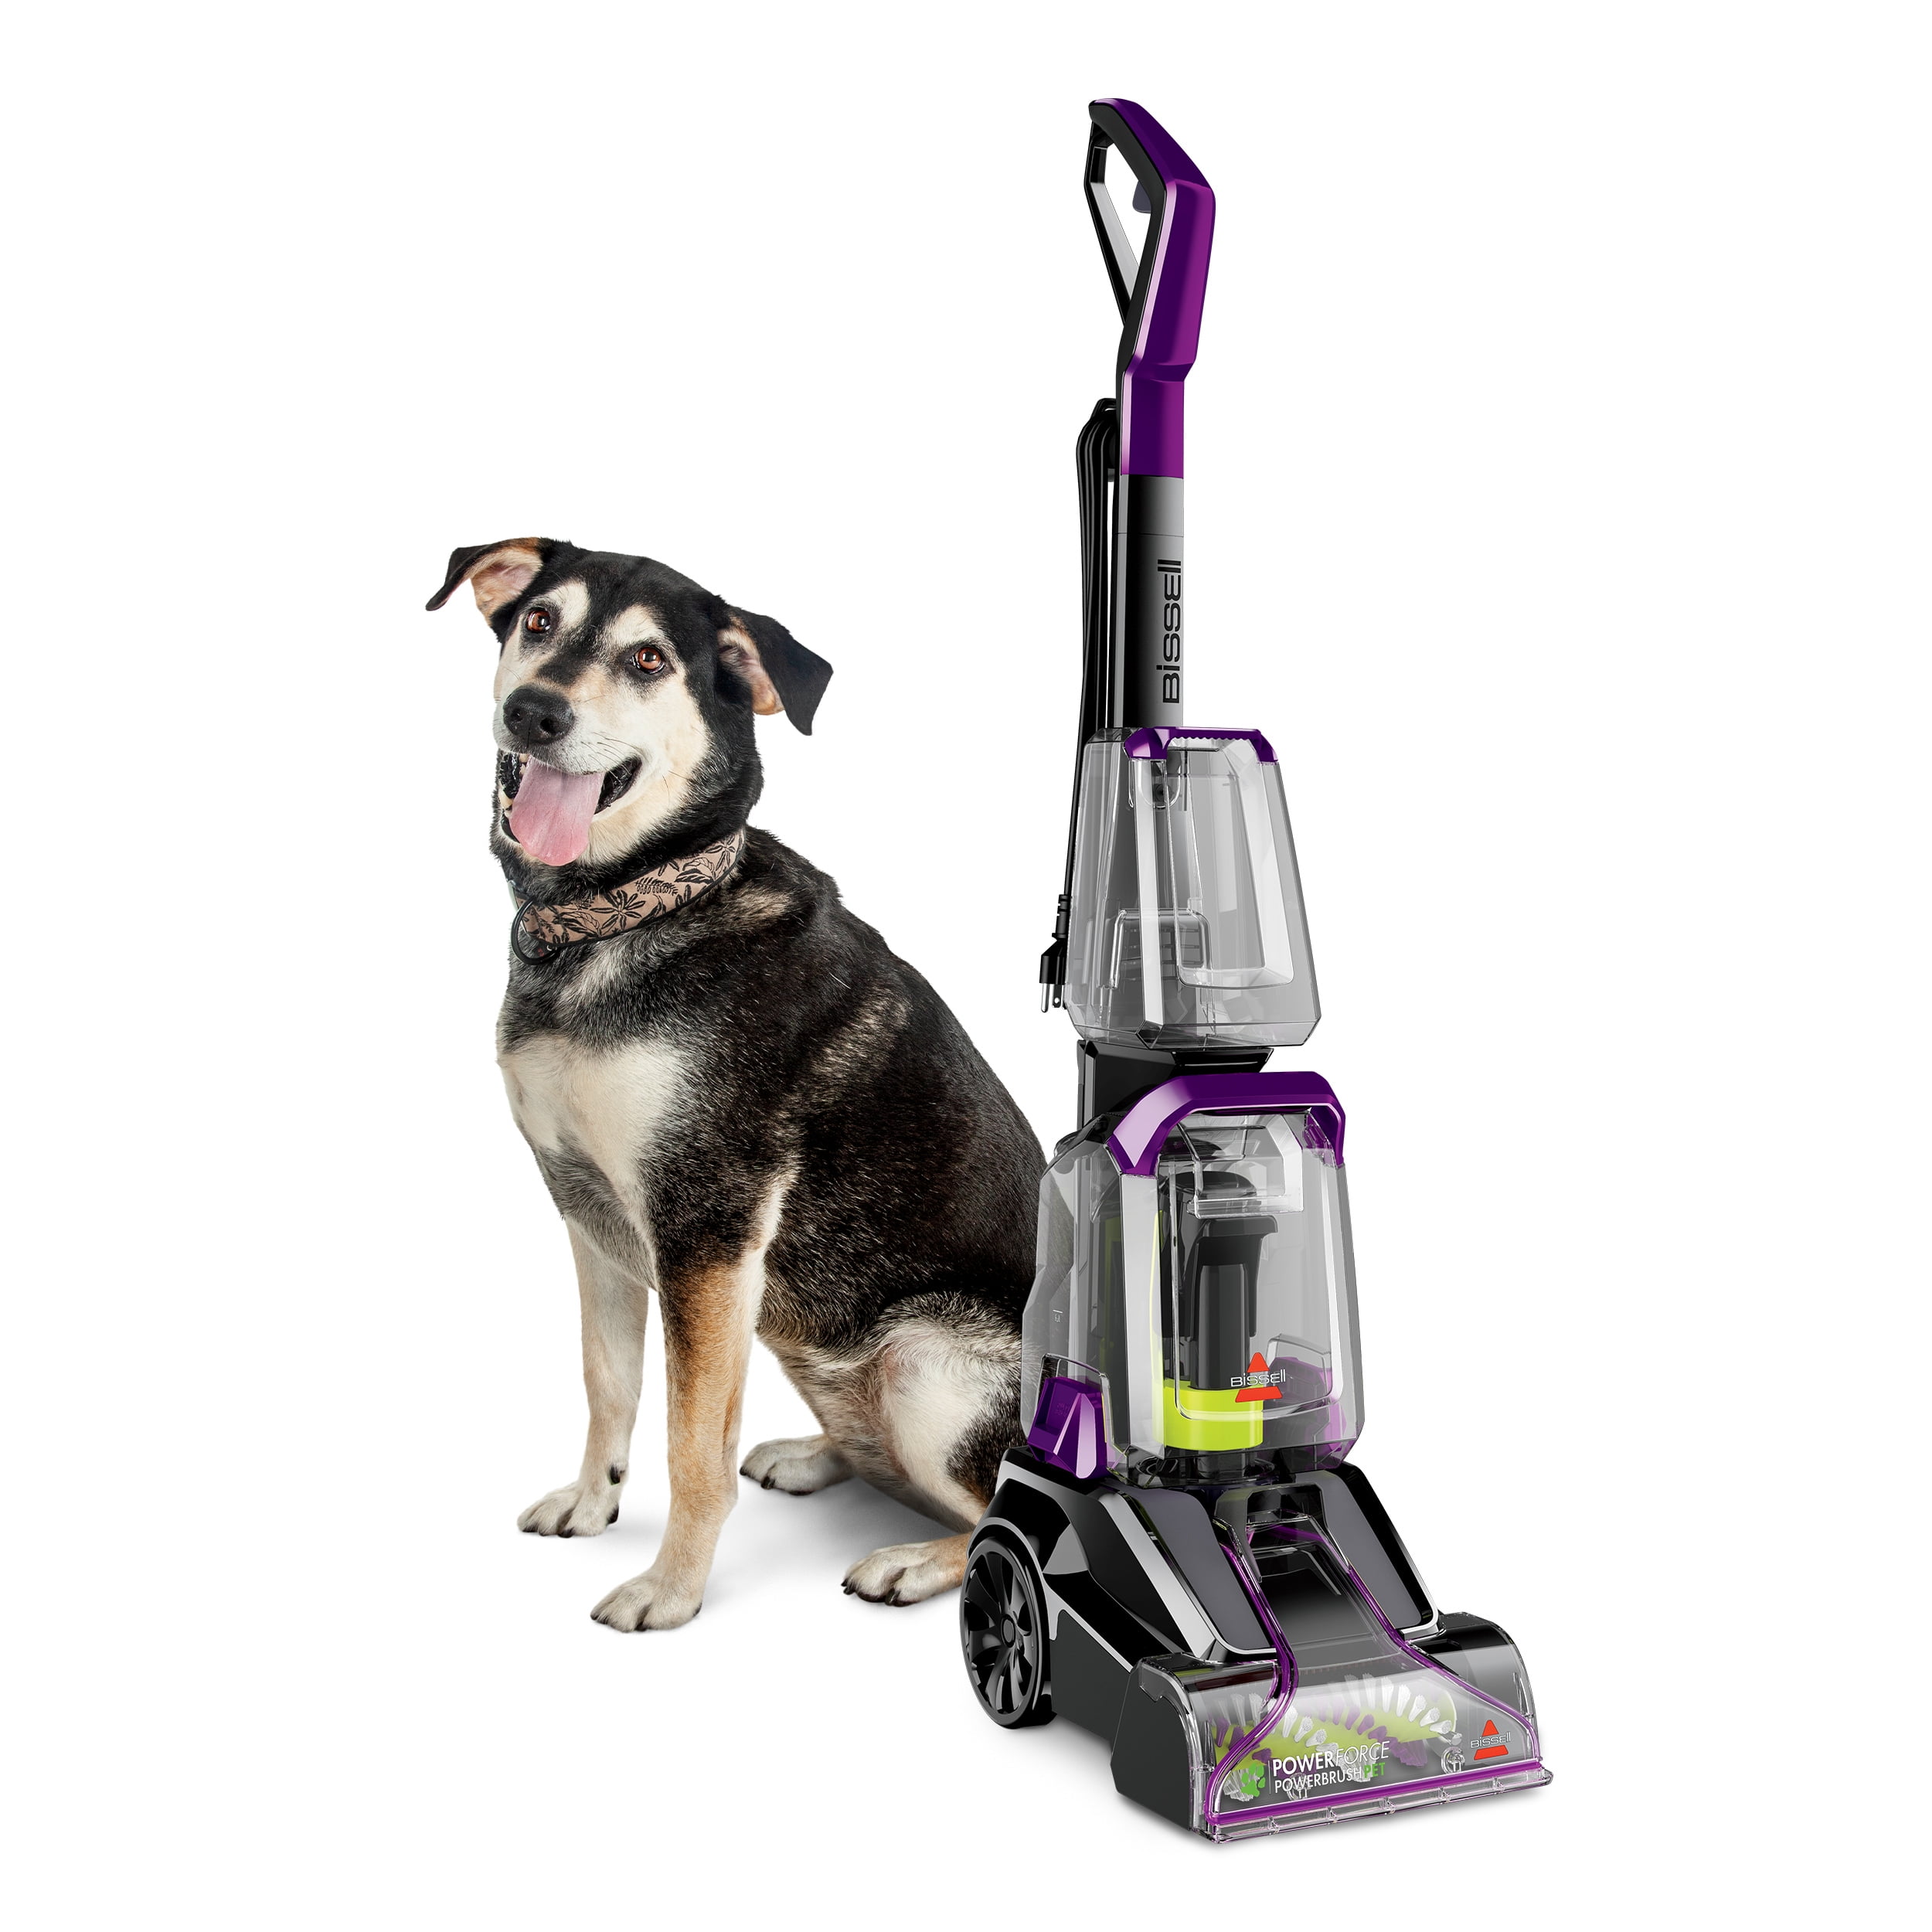 Bissell Revolution HydroSteam Pet Carpet Cleaner Review - Vacuum Wars